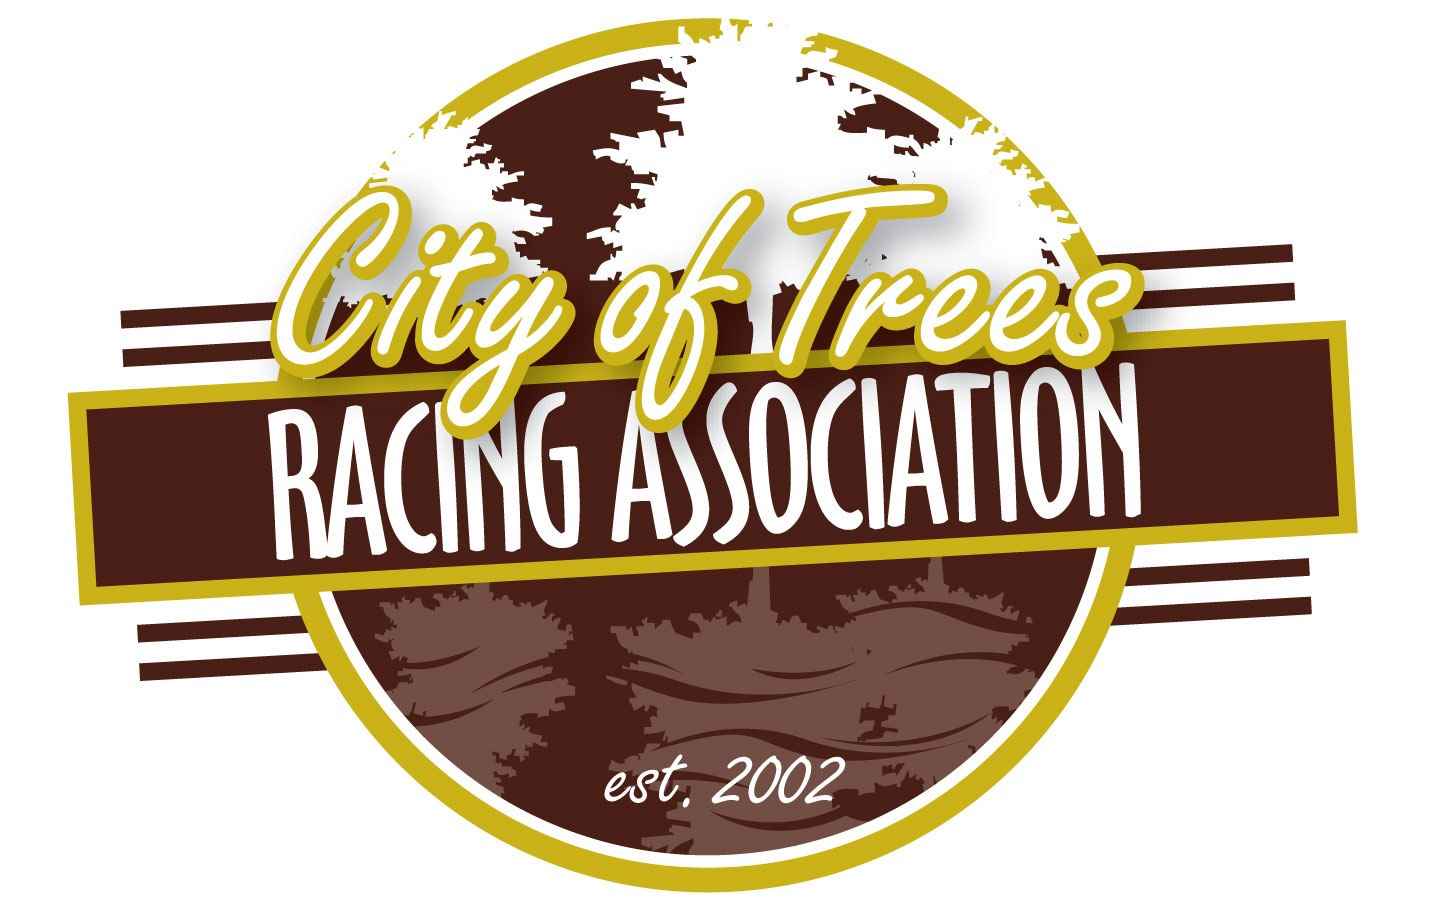 City of Trees Marathon and Half Marathon Boise RunWalk